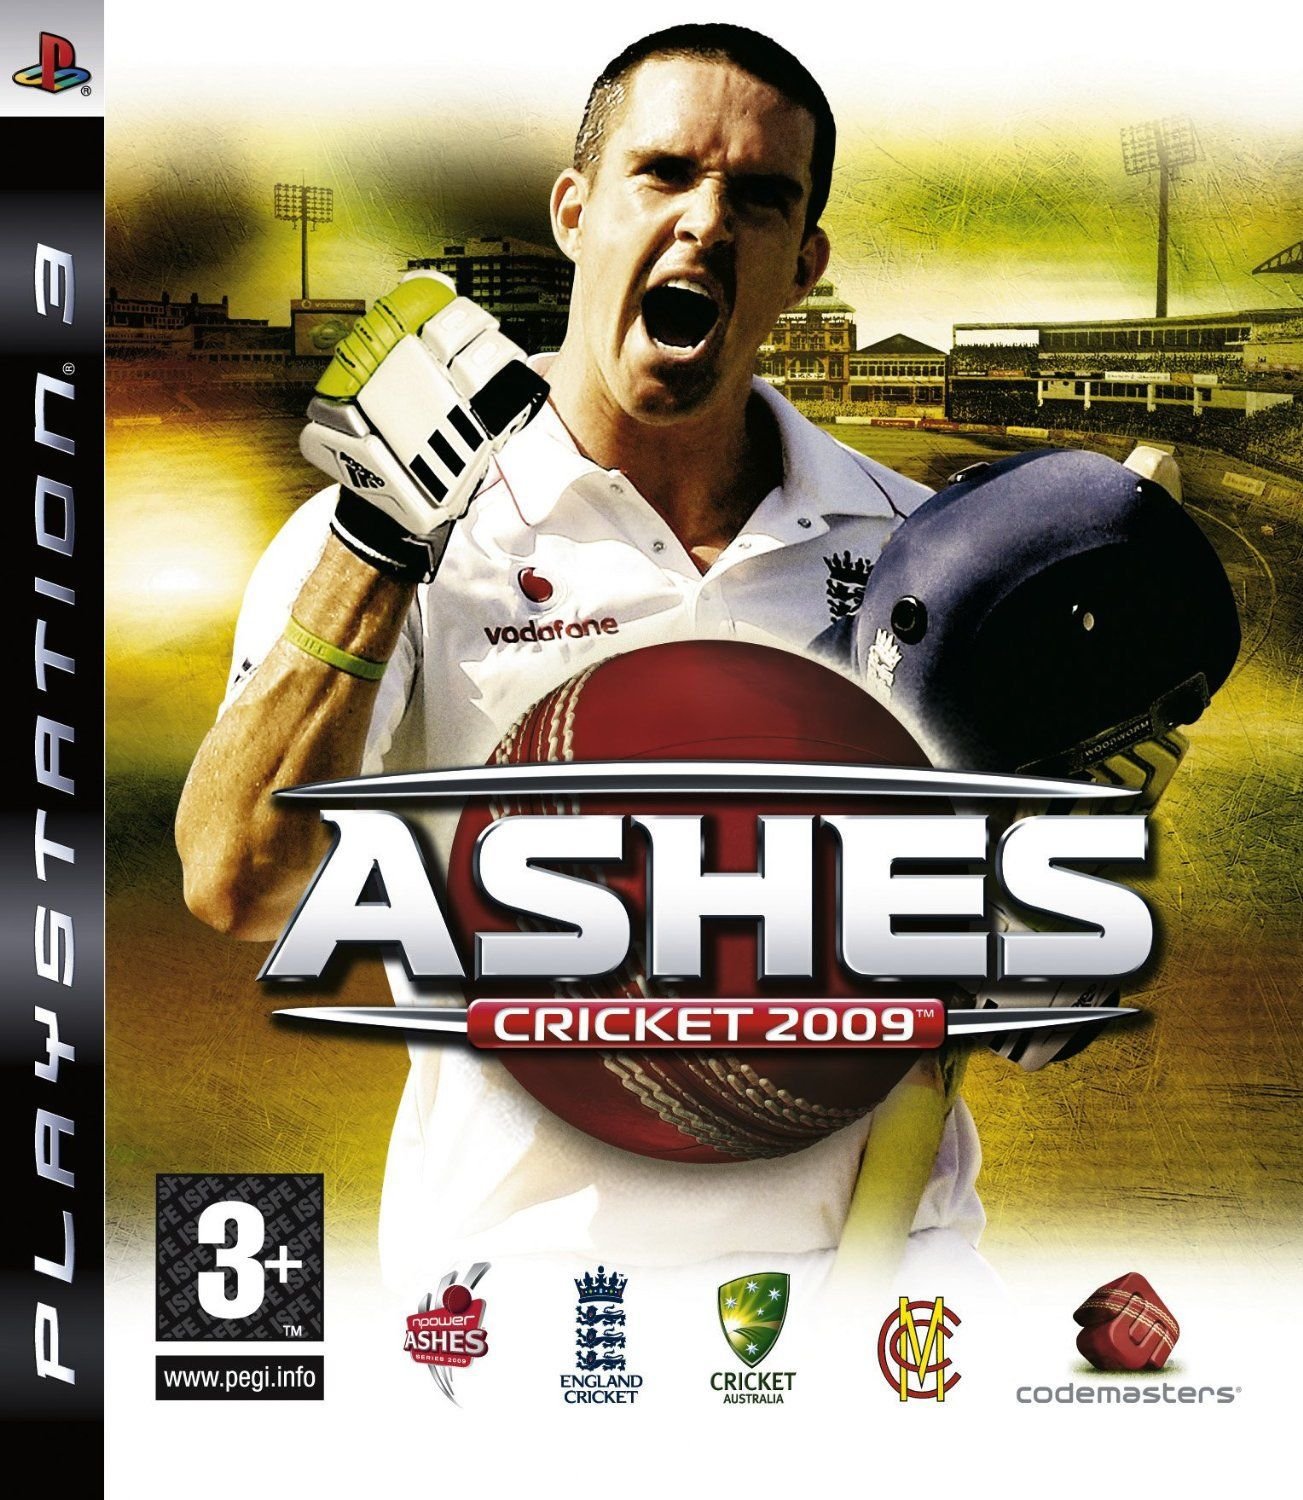 Amazon.com: Ashes Cricket (2009) PS3 : Video Games